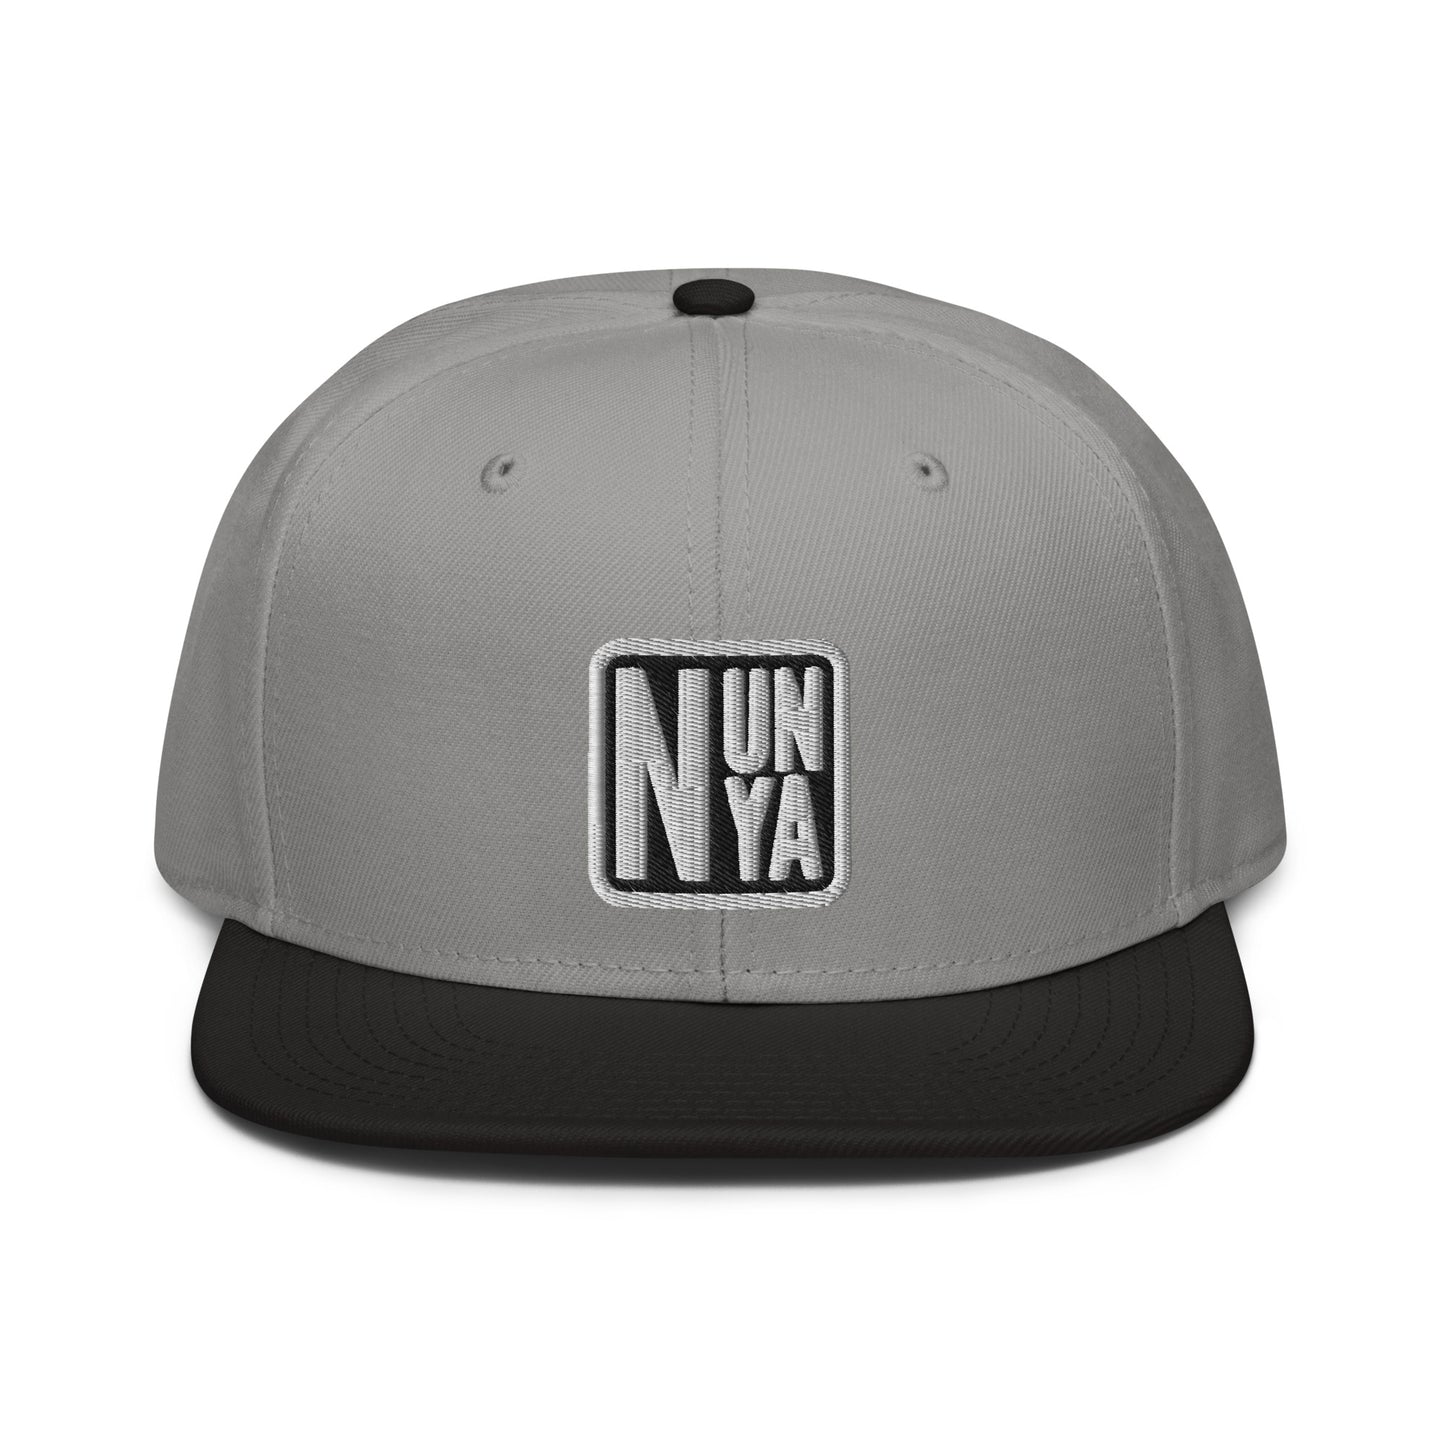 Nunya (w) Snapback Hat